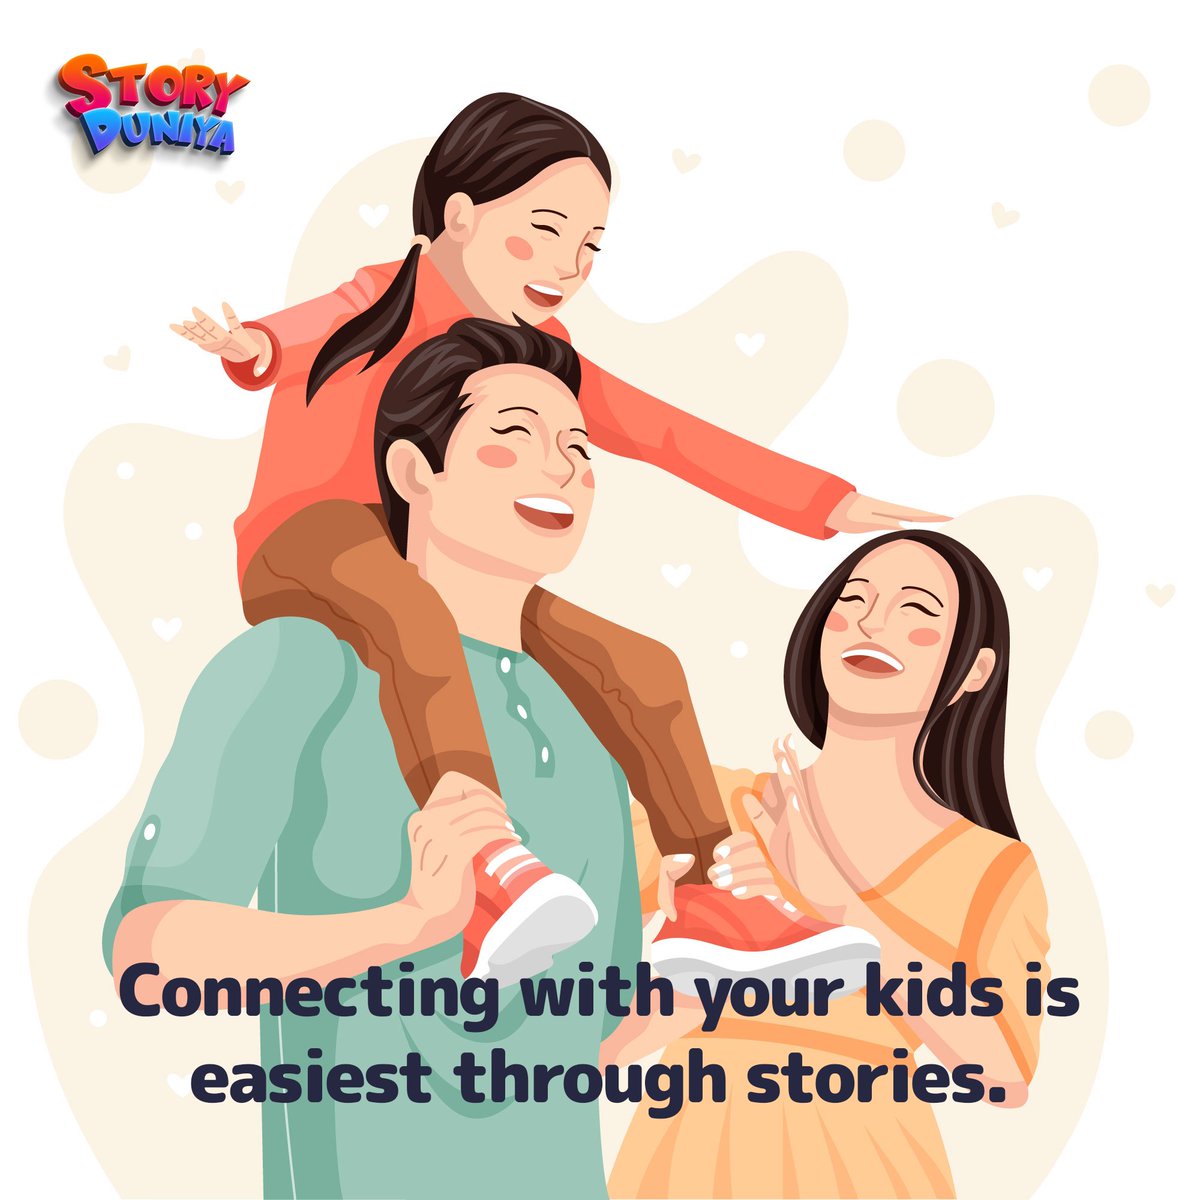 Connecting with your kids is easiest through strories.

#storyduniya #storytime #happiness #happykids #kidslove #GiftForKids #winter #story #storytelling #storyteller #indianstory #kidsapp #kidsstory #parenting #MoralStory #moralstoryforkids #nandu #gauri #KidsOTT #love